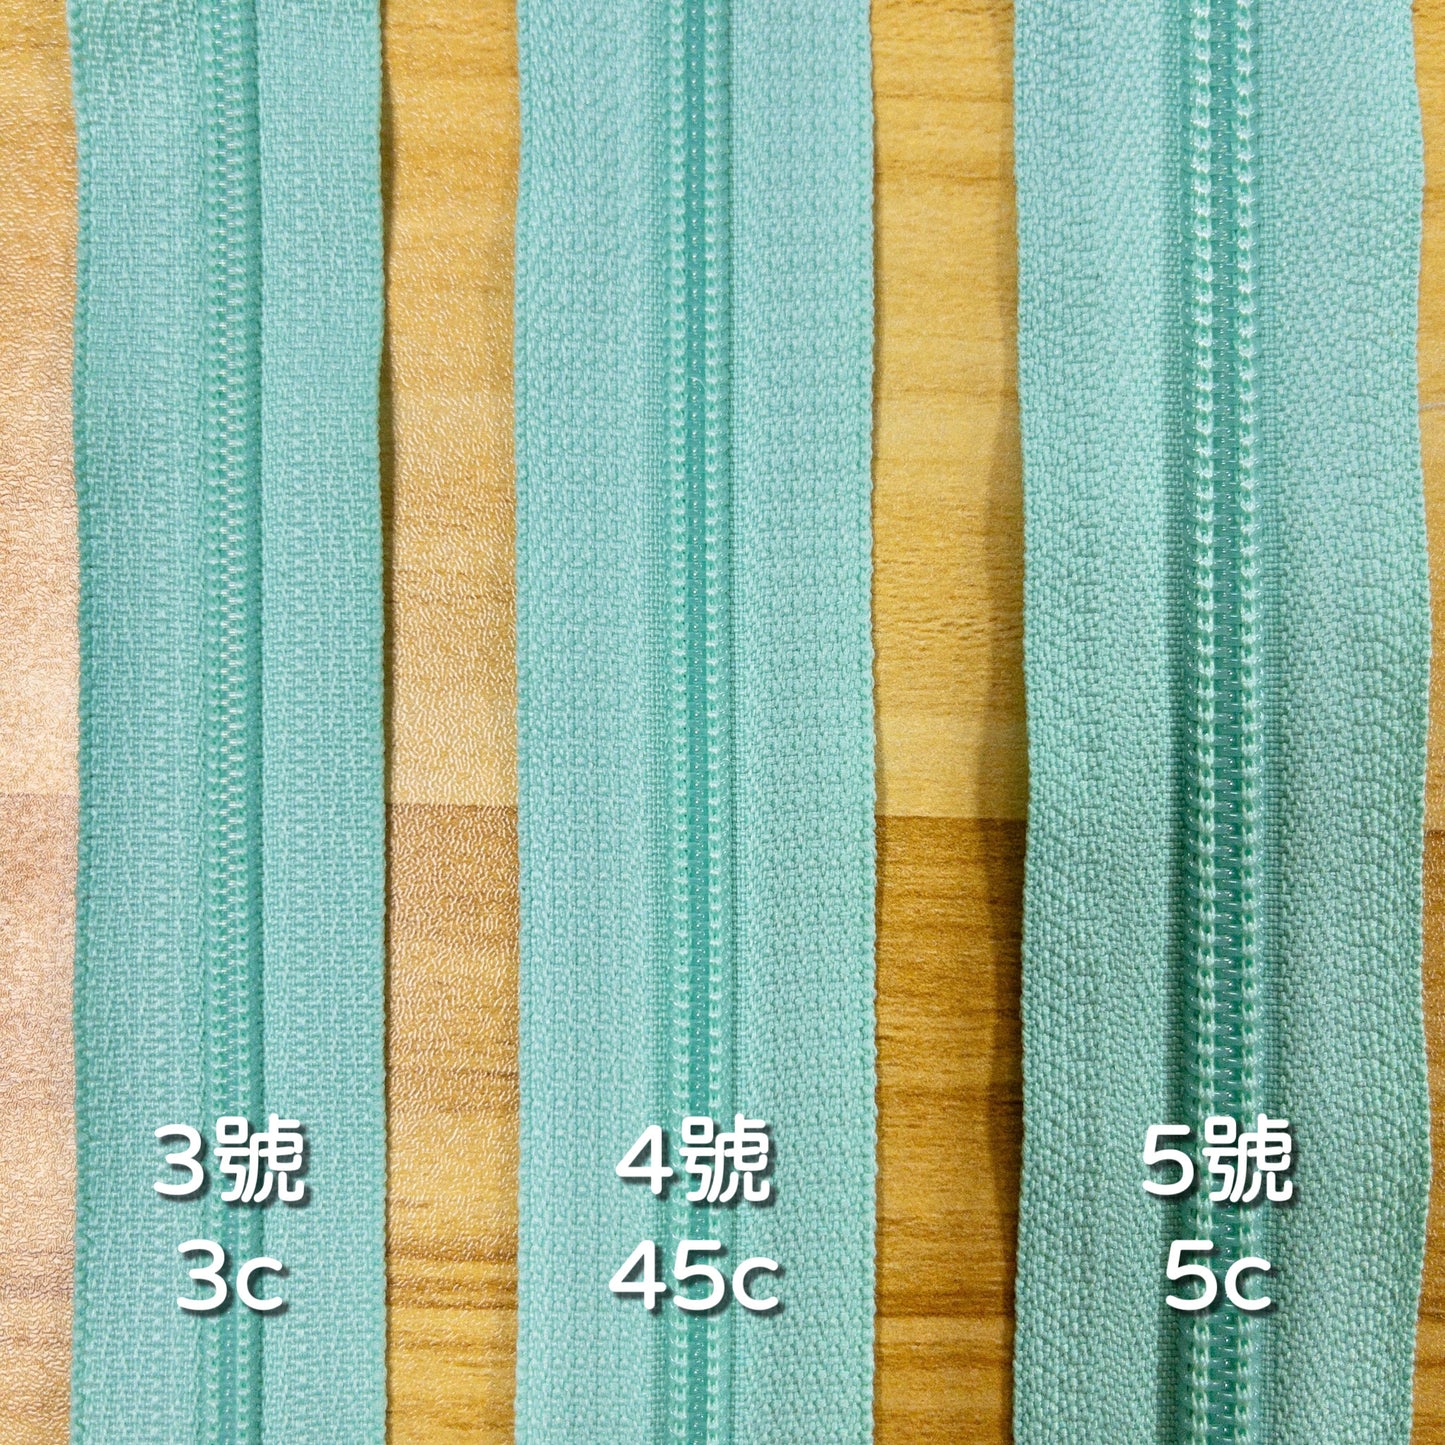 YKK Coil Nylon close end zipper 20cm 10 colors YKK尼龍密尾拉鍊 20cm 10色